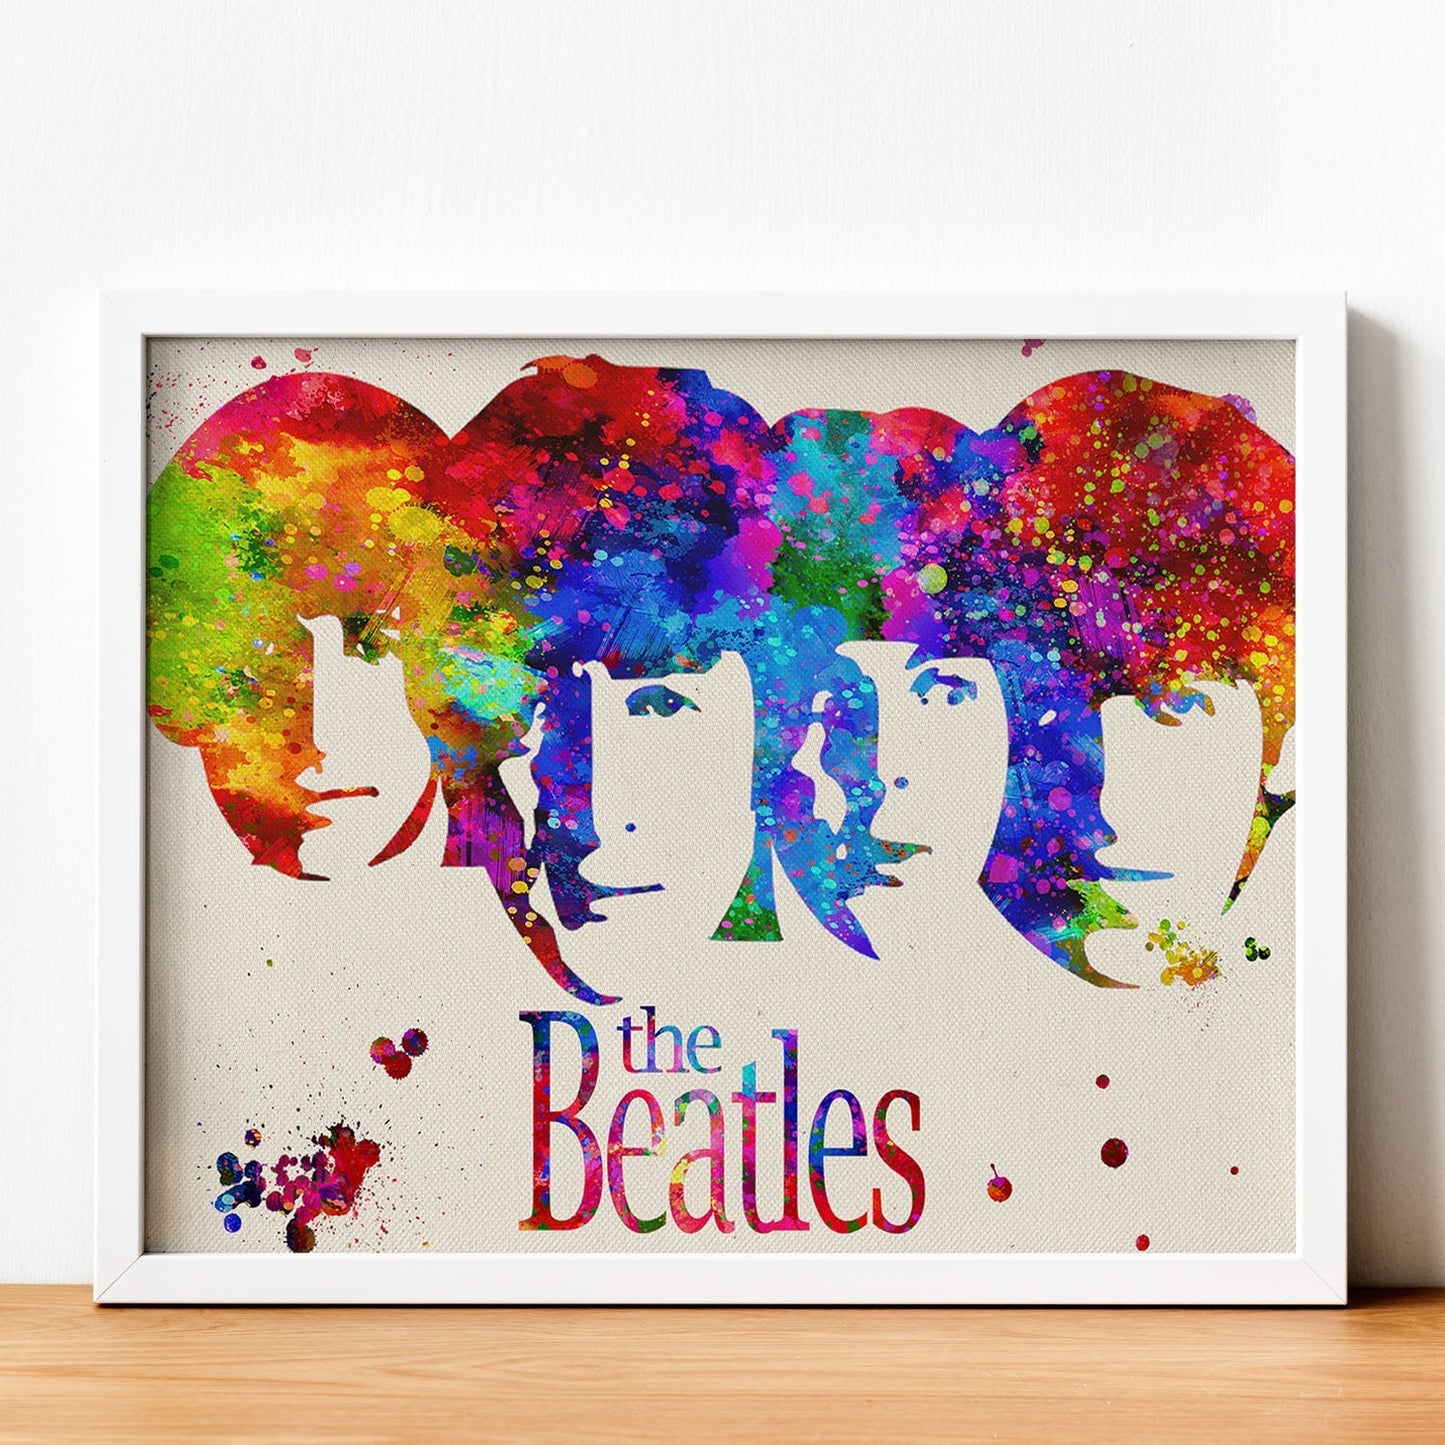 Lámina de la banda de música The Beatles (caras) en Poster estilo explosión de color . Papel 250 gr alta calidad.-Artwork-Nacnic-Nacnic Estudio SL